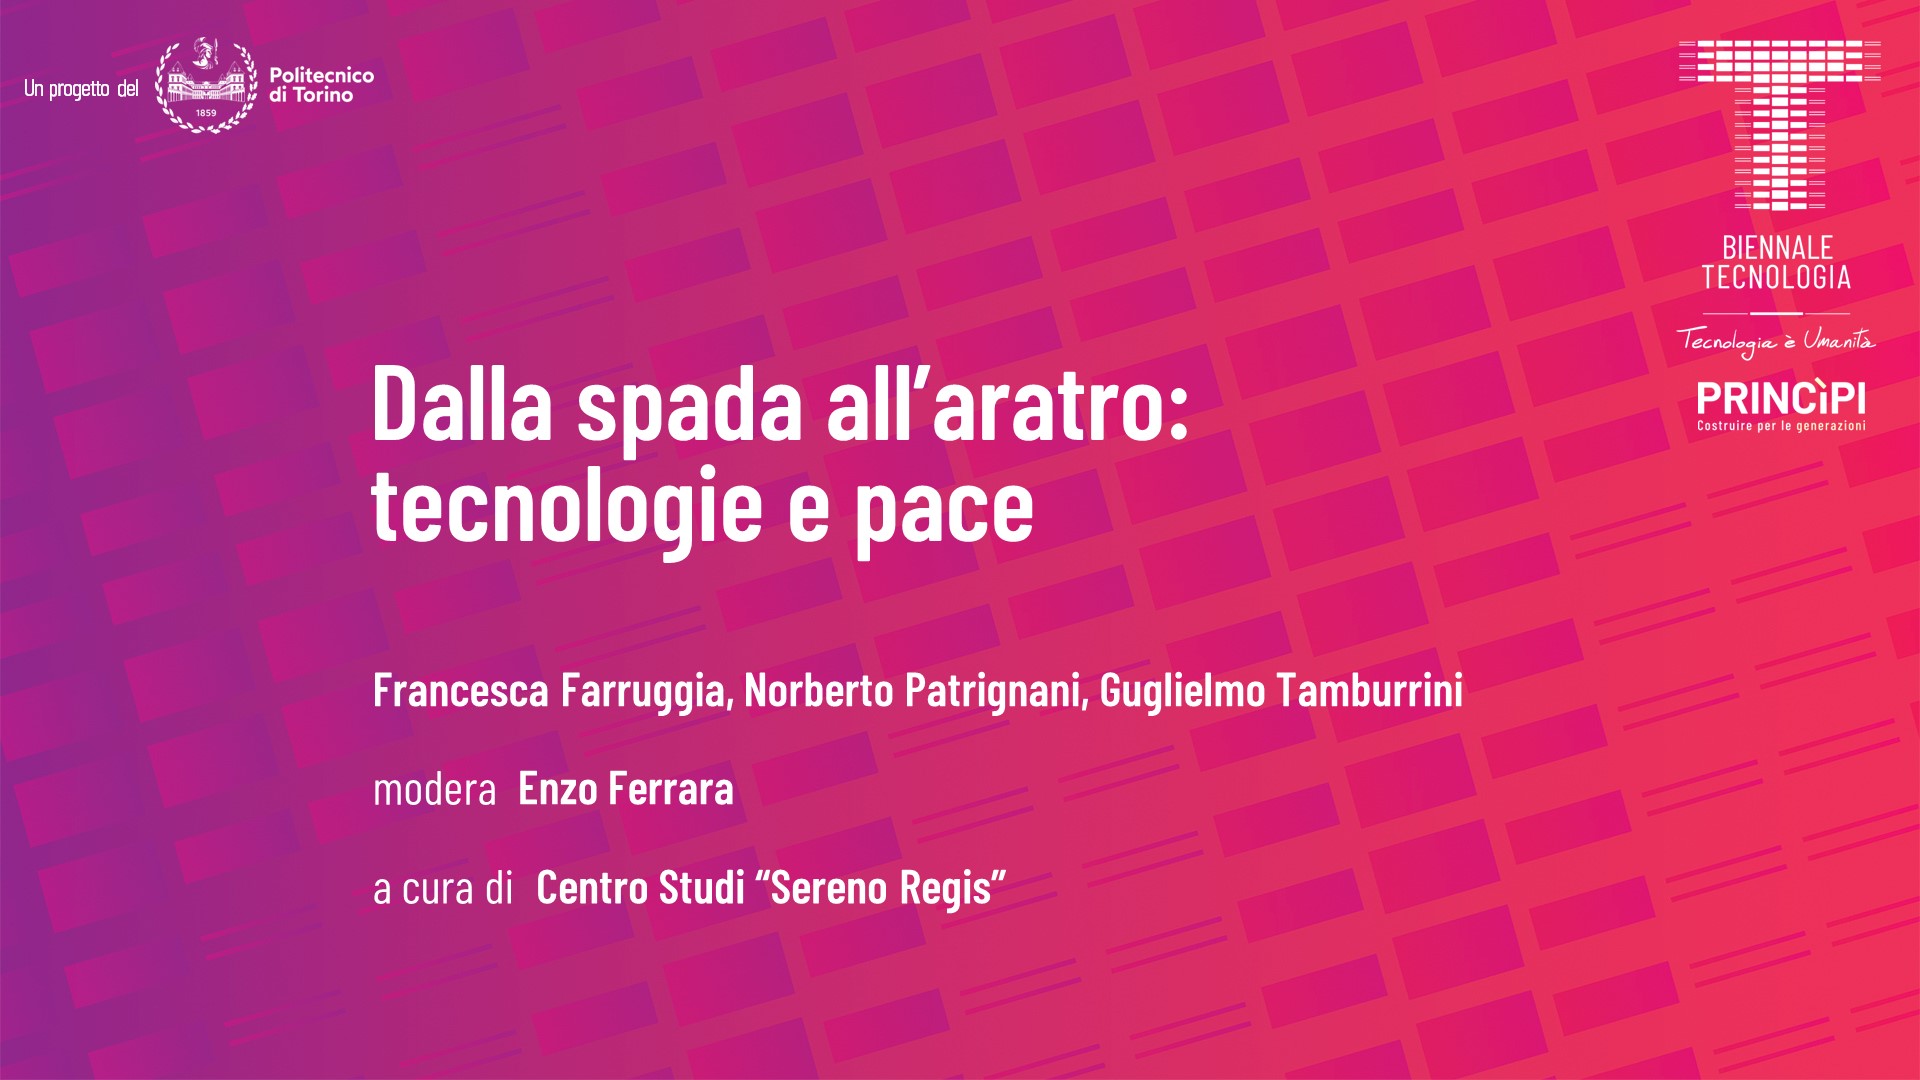 Copertina di Biennale Tecnologia | 11-13 novembre 2022